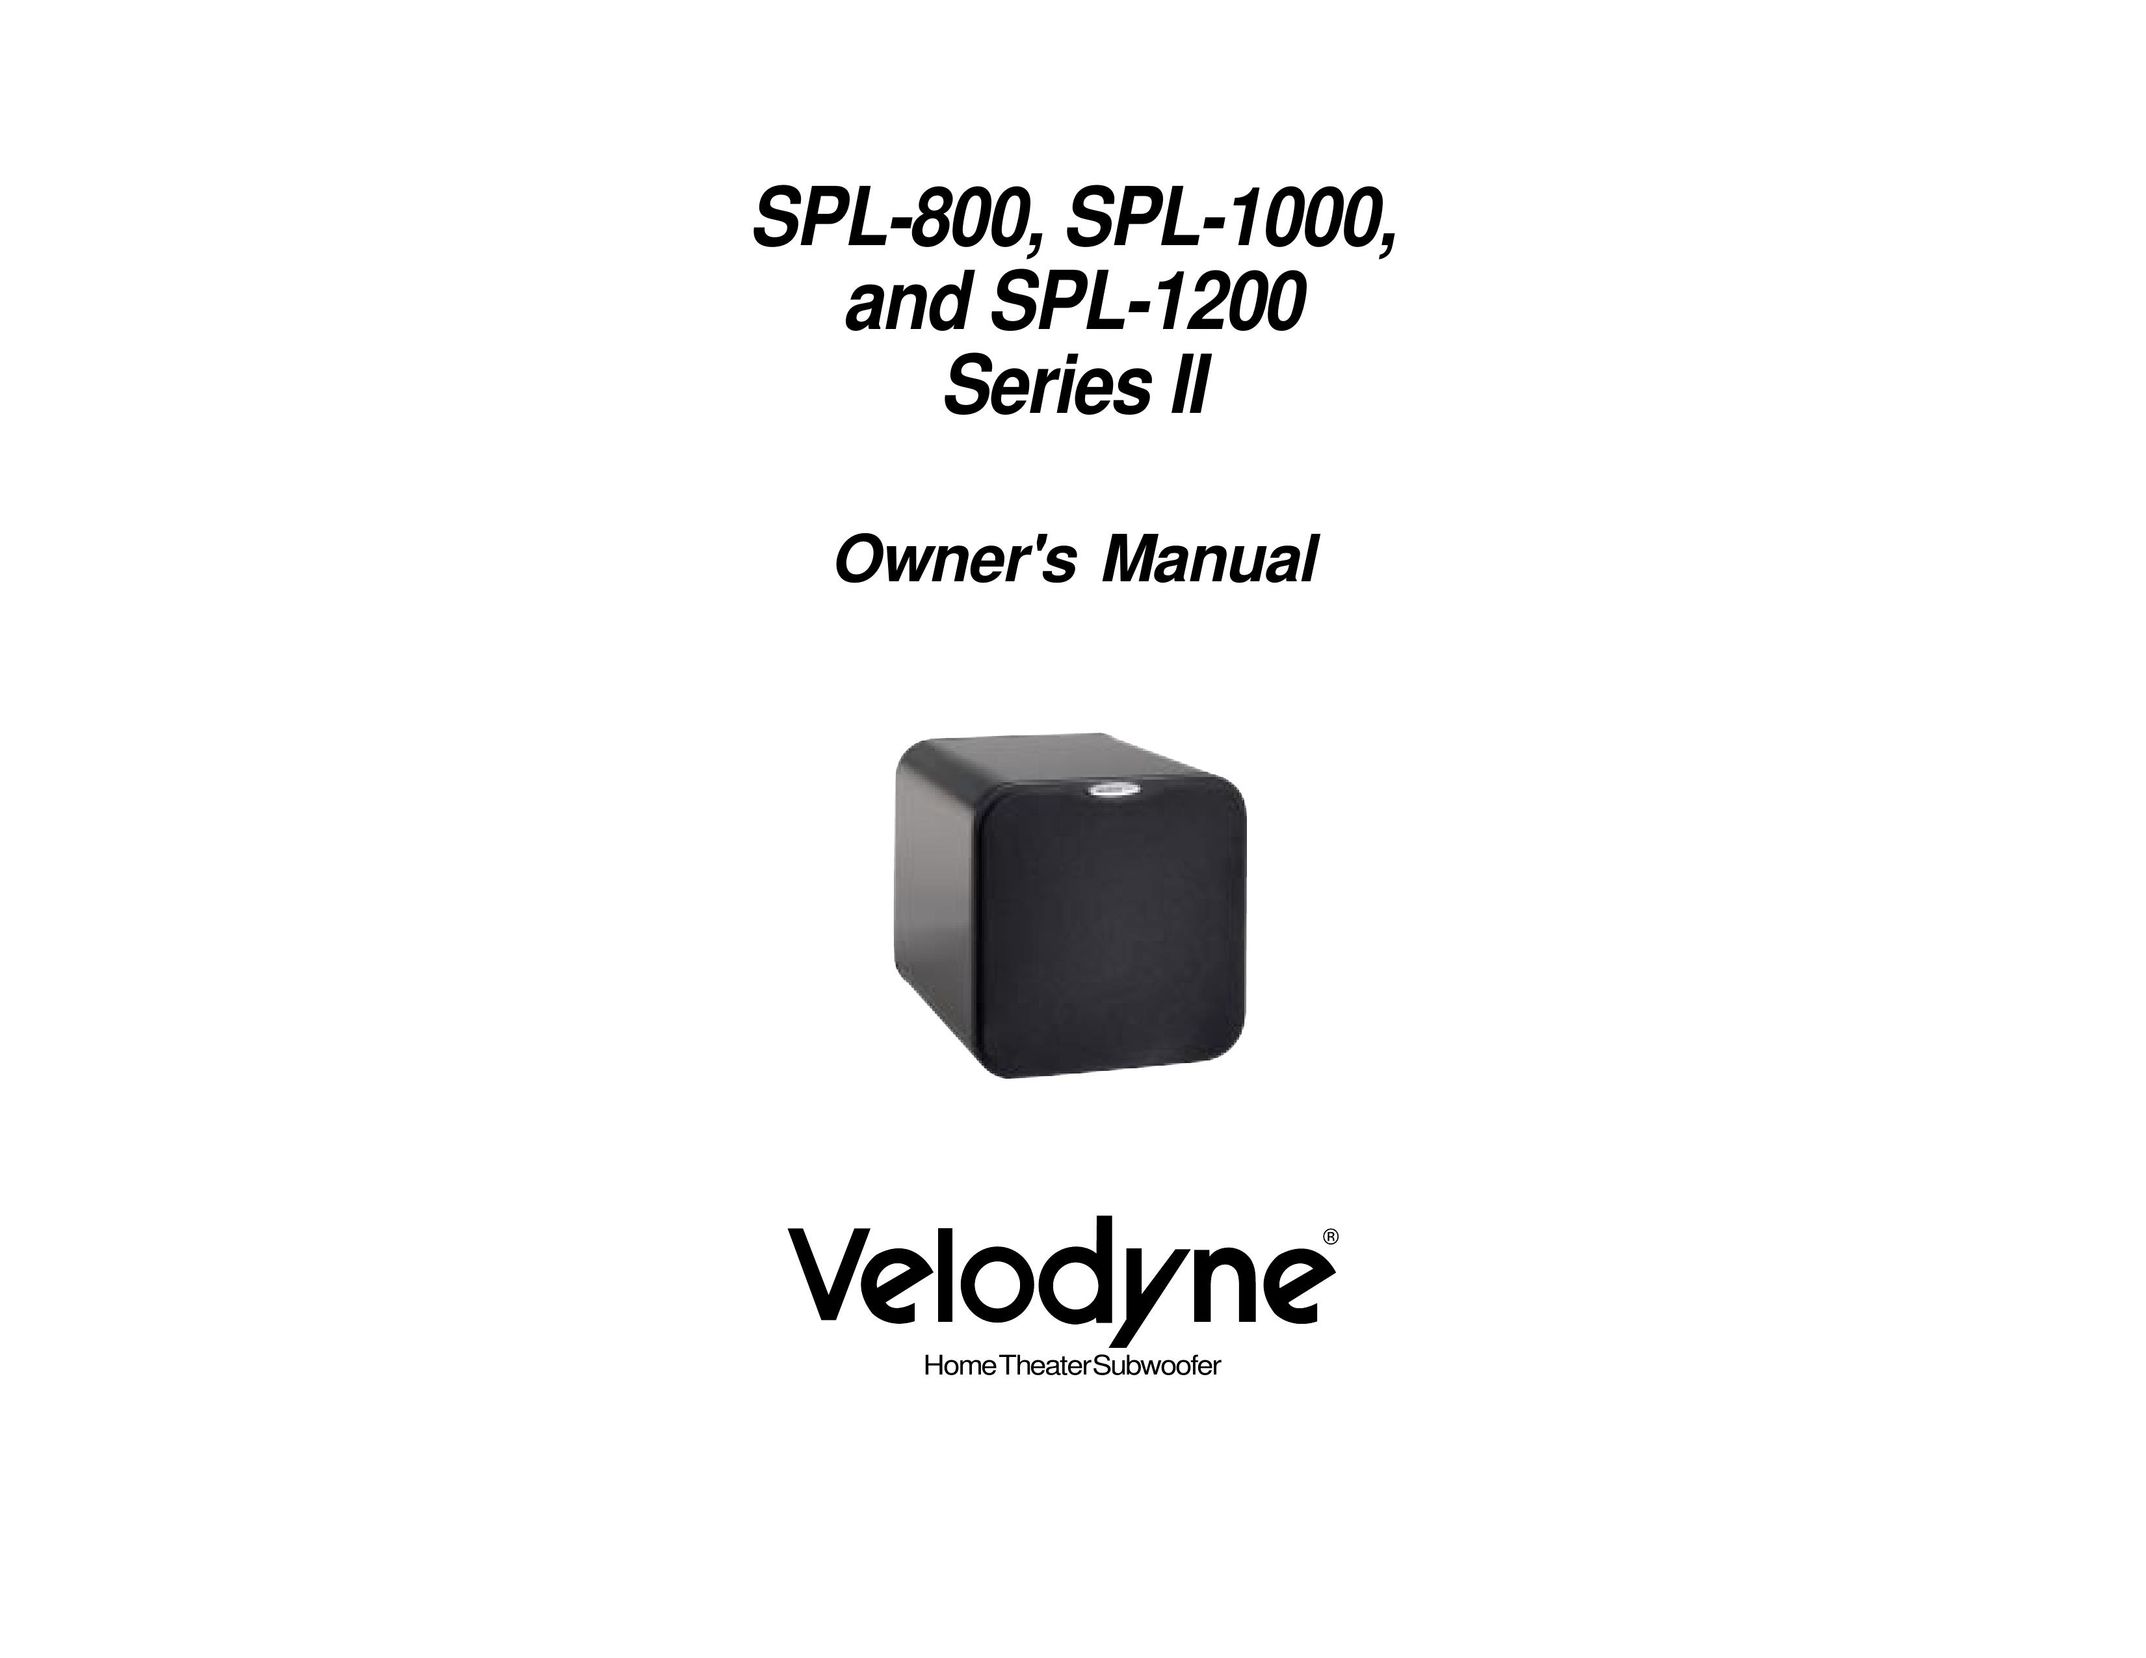 Velodyne Acoustics and SPL-1200 Speaker System User Manual